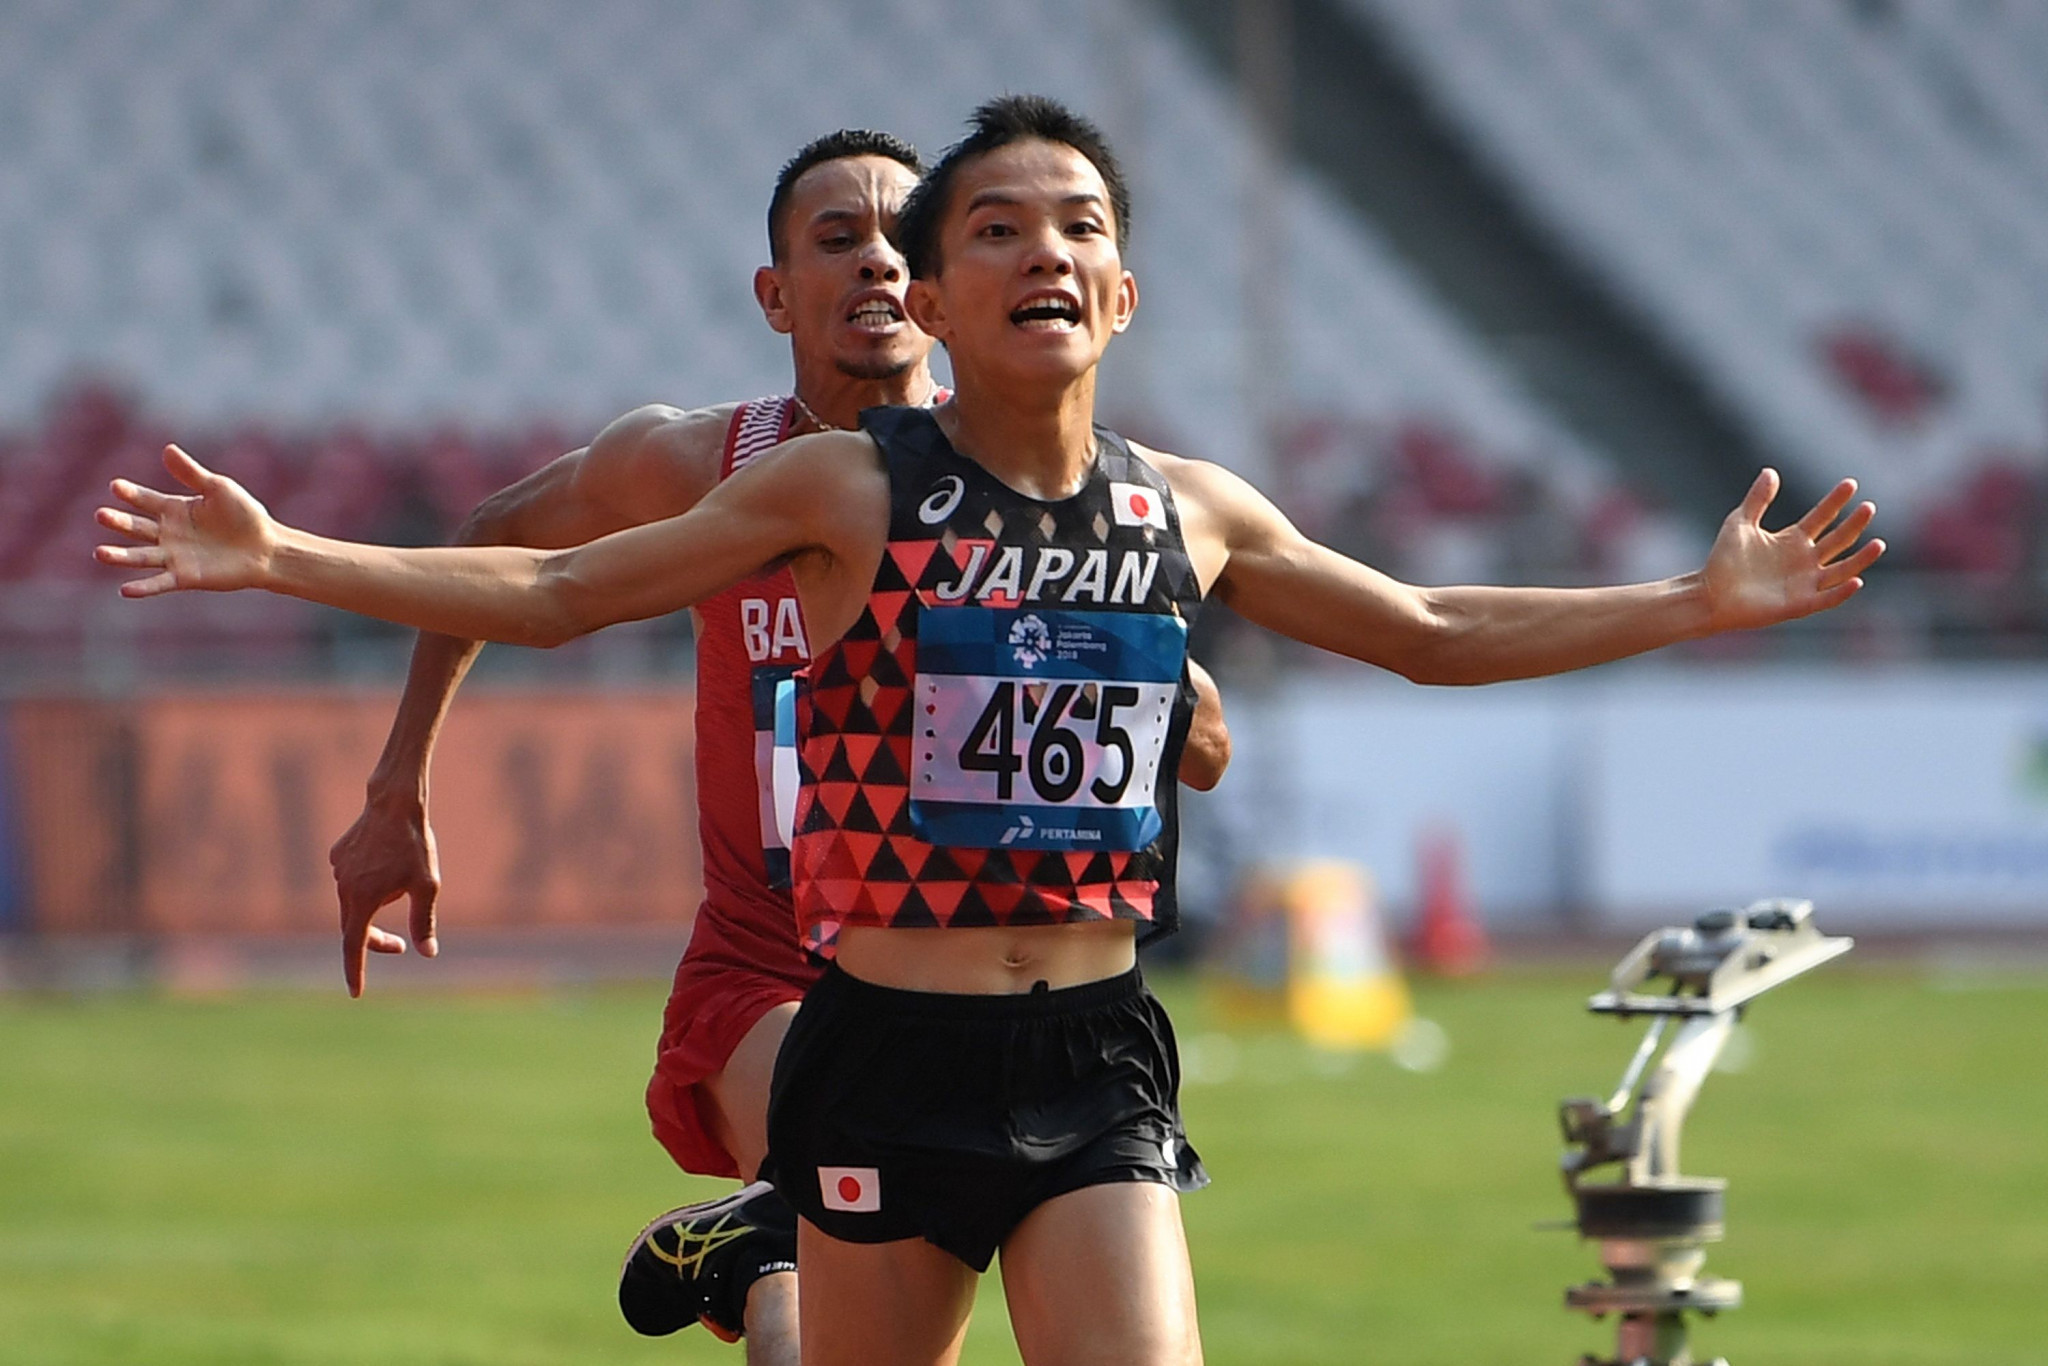 Japan's Hiroto Inoue won the men's marathon in controversial circumstances as Elhassan Elabbassi, behind, felt he was pushed ©Getty Images